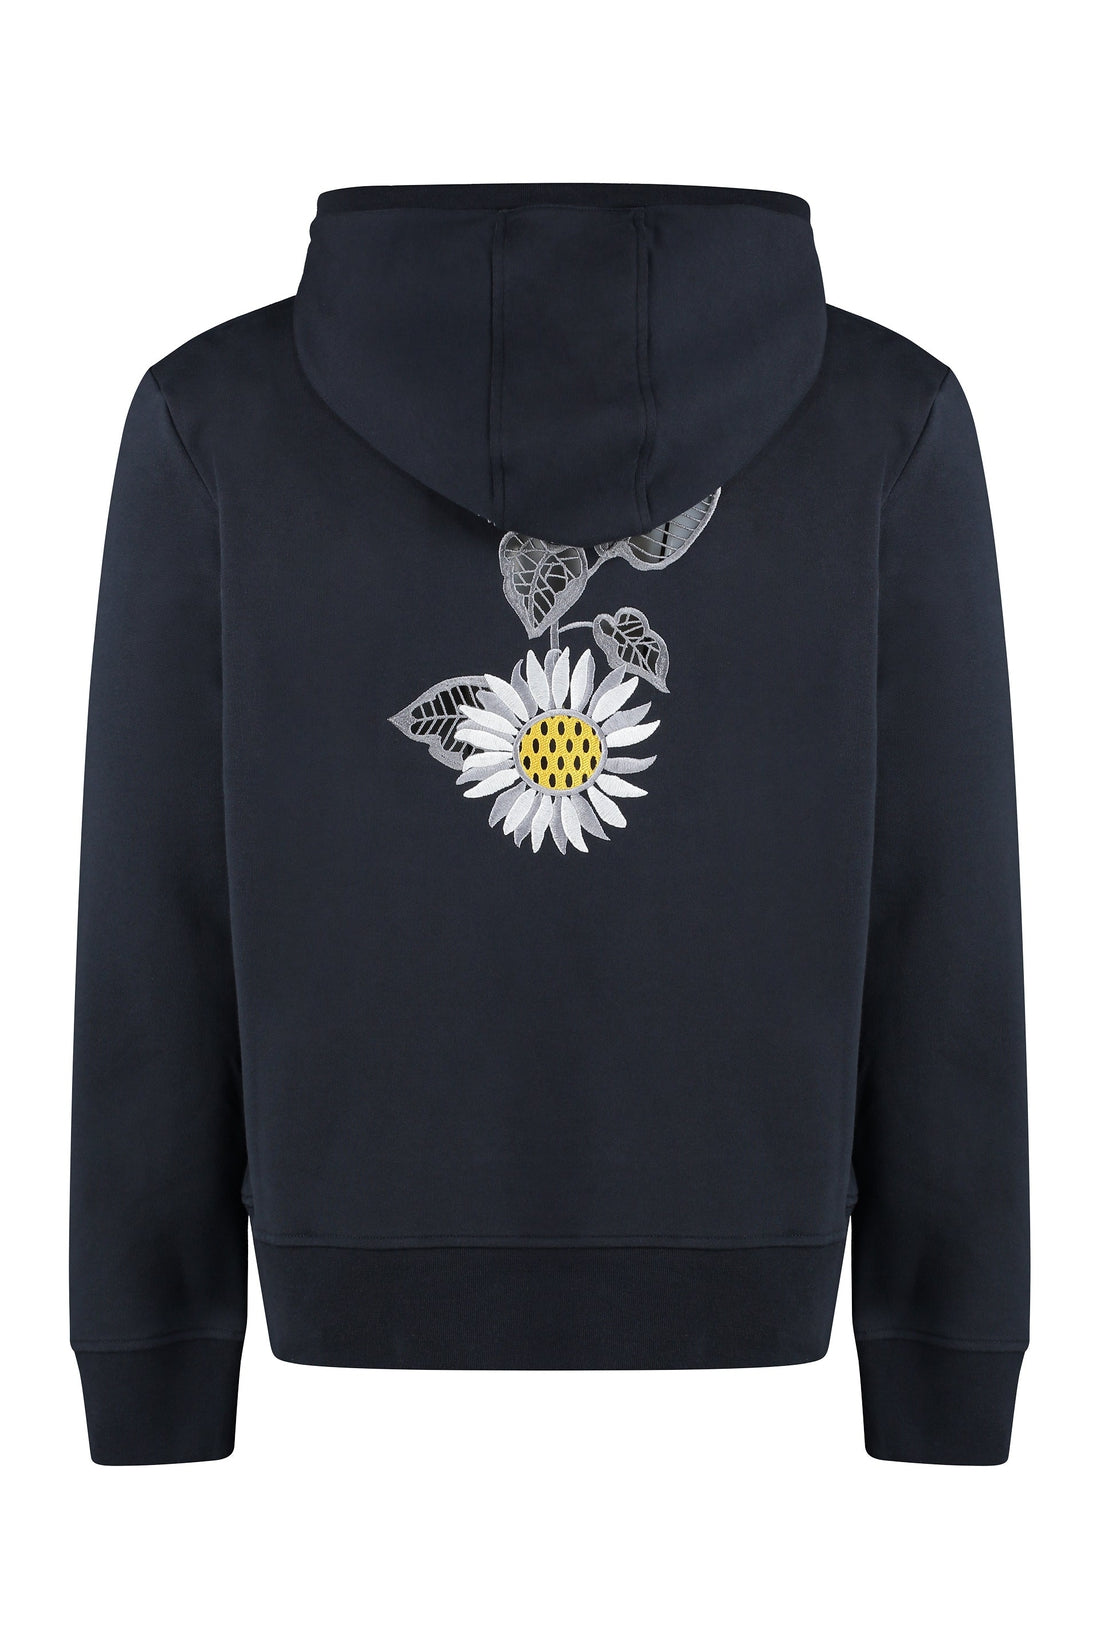 Thom Browne-OUTLET-SALE-Logo cotton hoodie-ARCHIVIST